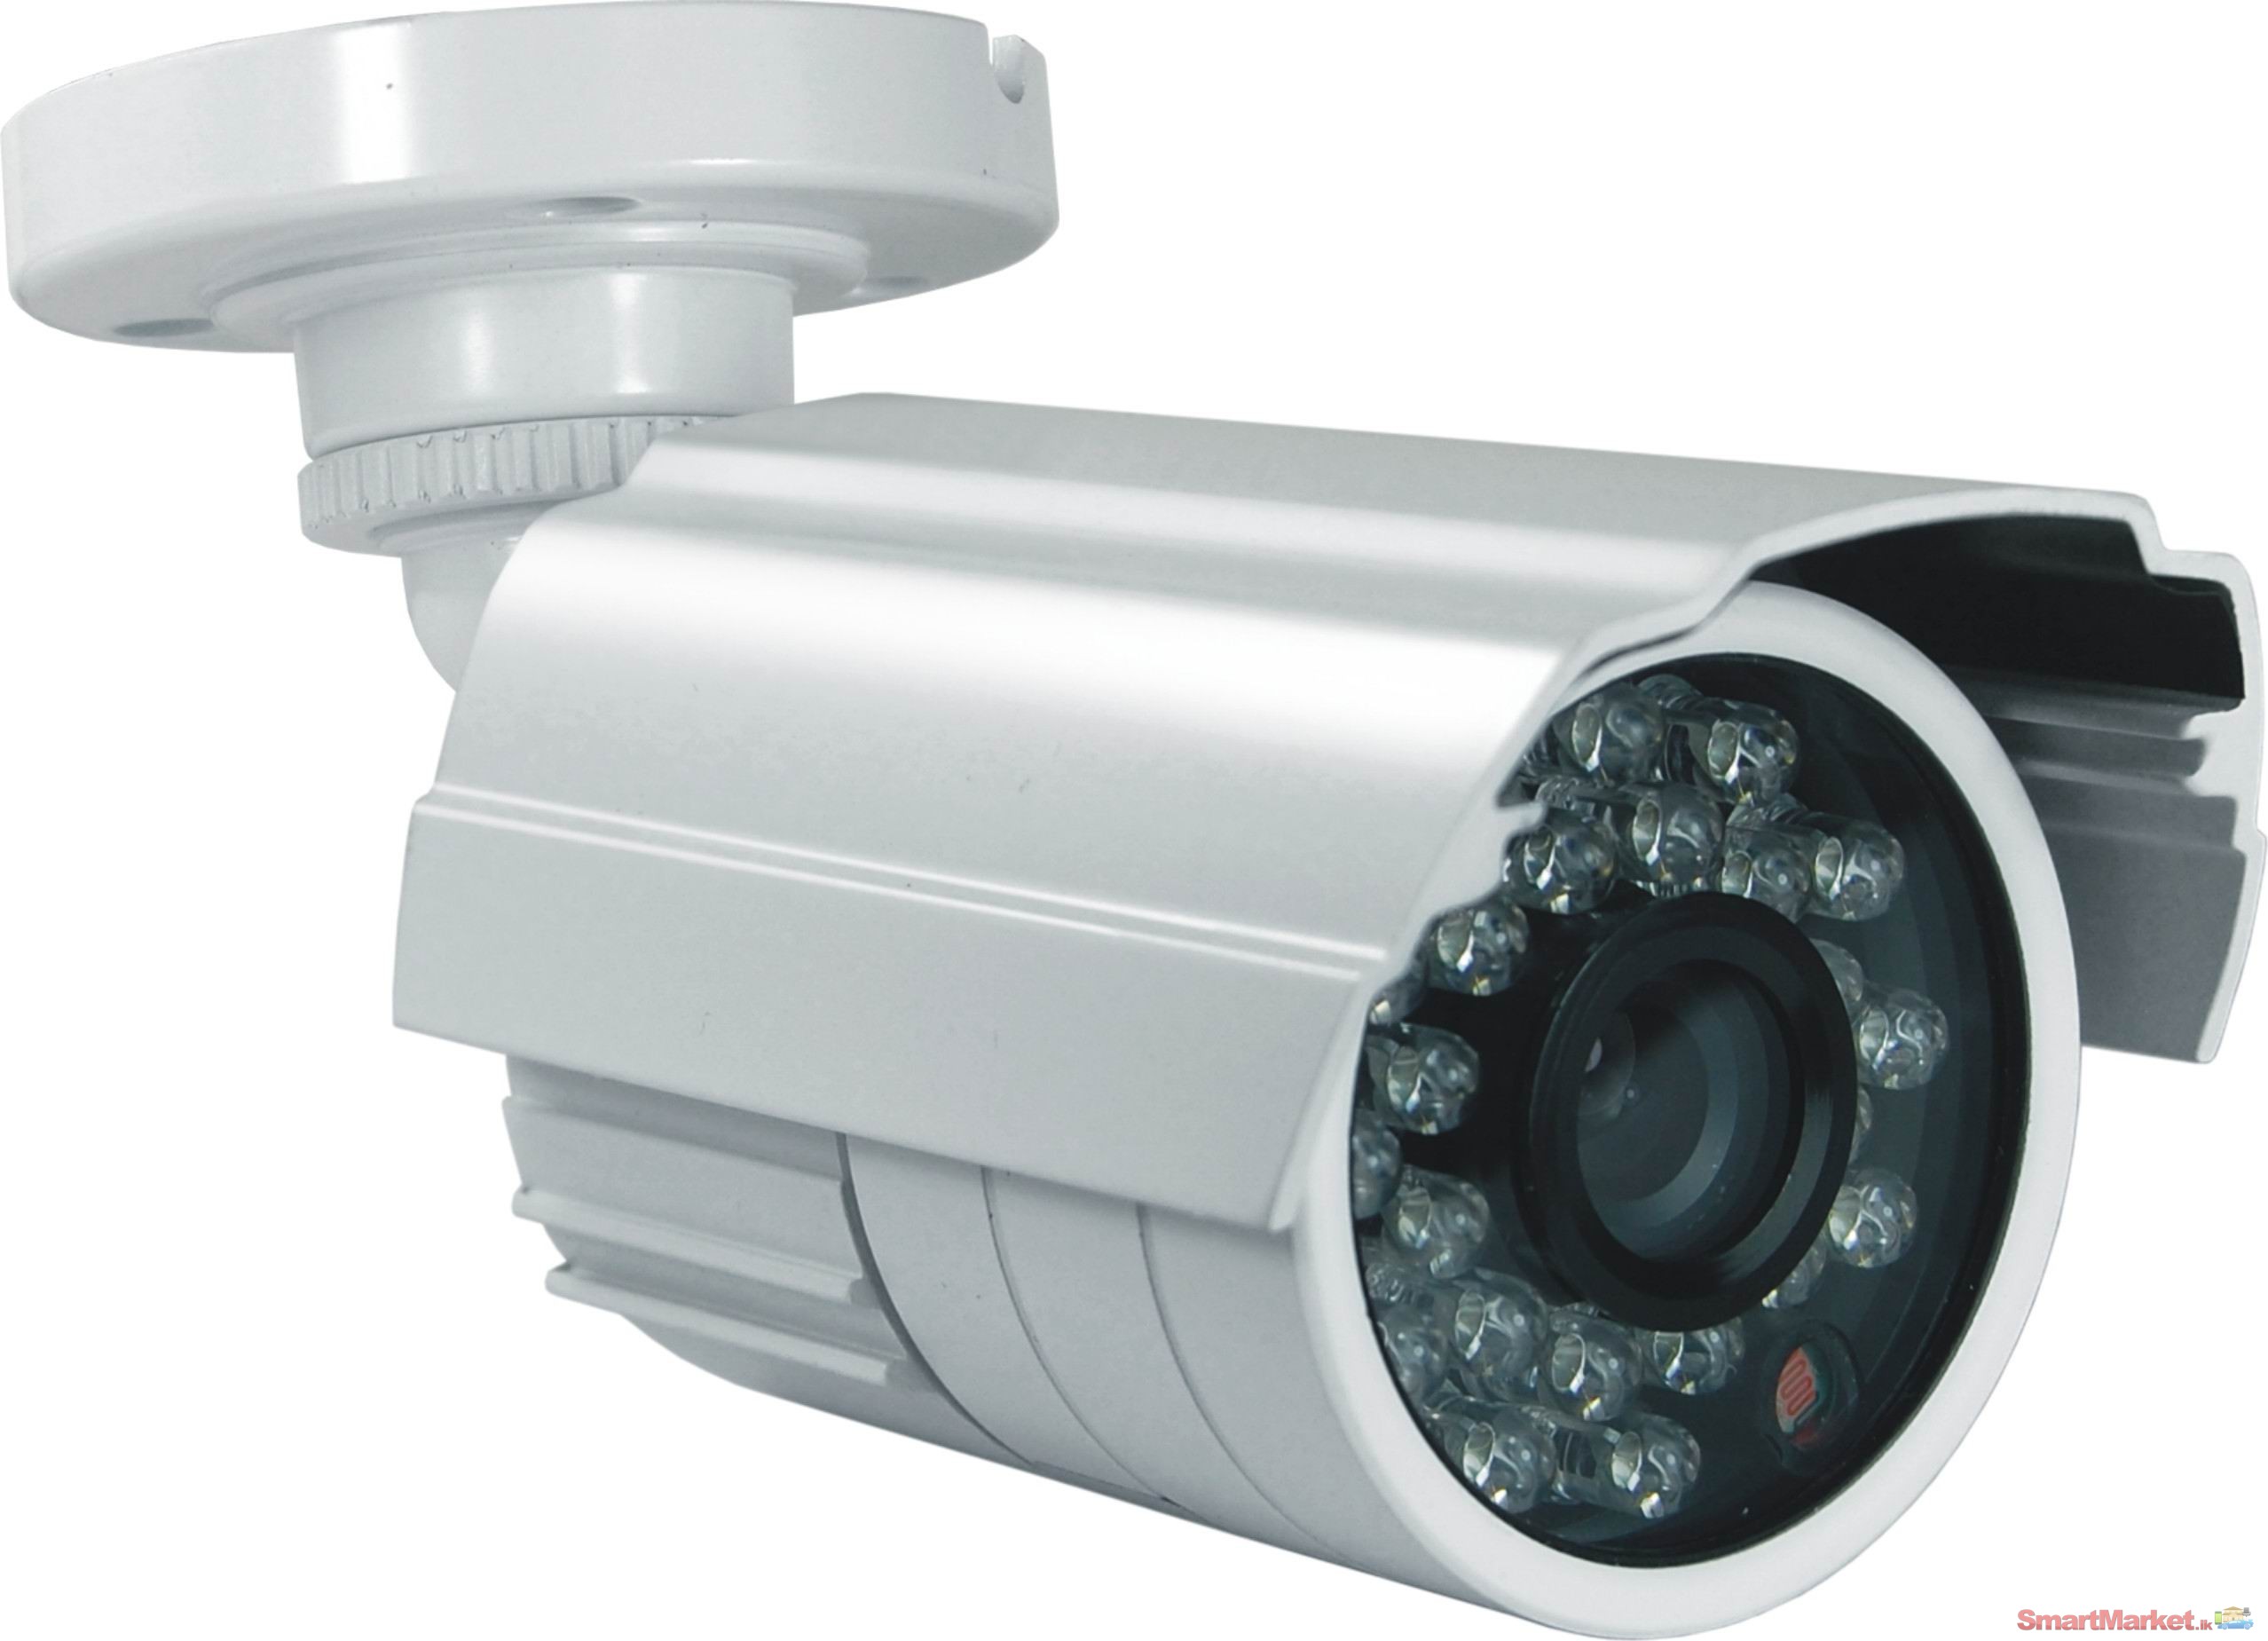 CCTV Camera Buy 5 Camera Get 1 FREE